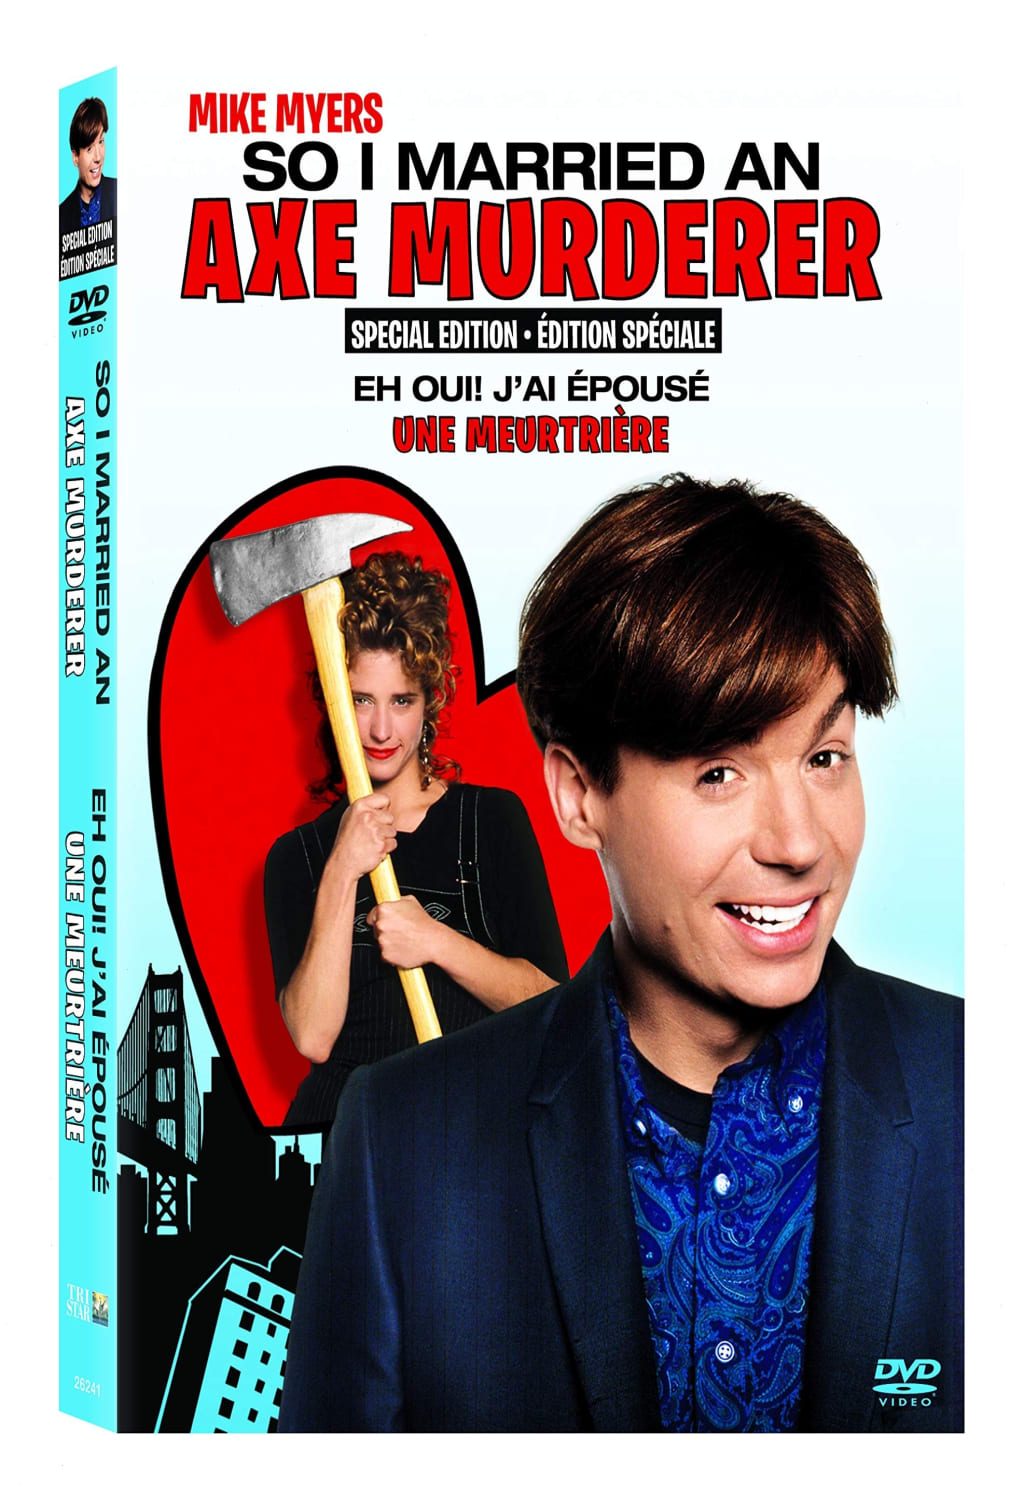 So I Married an Axe Murderer (DVD) on MovieShack